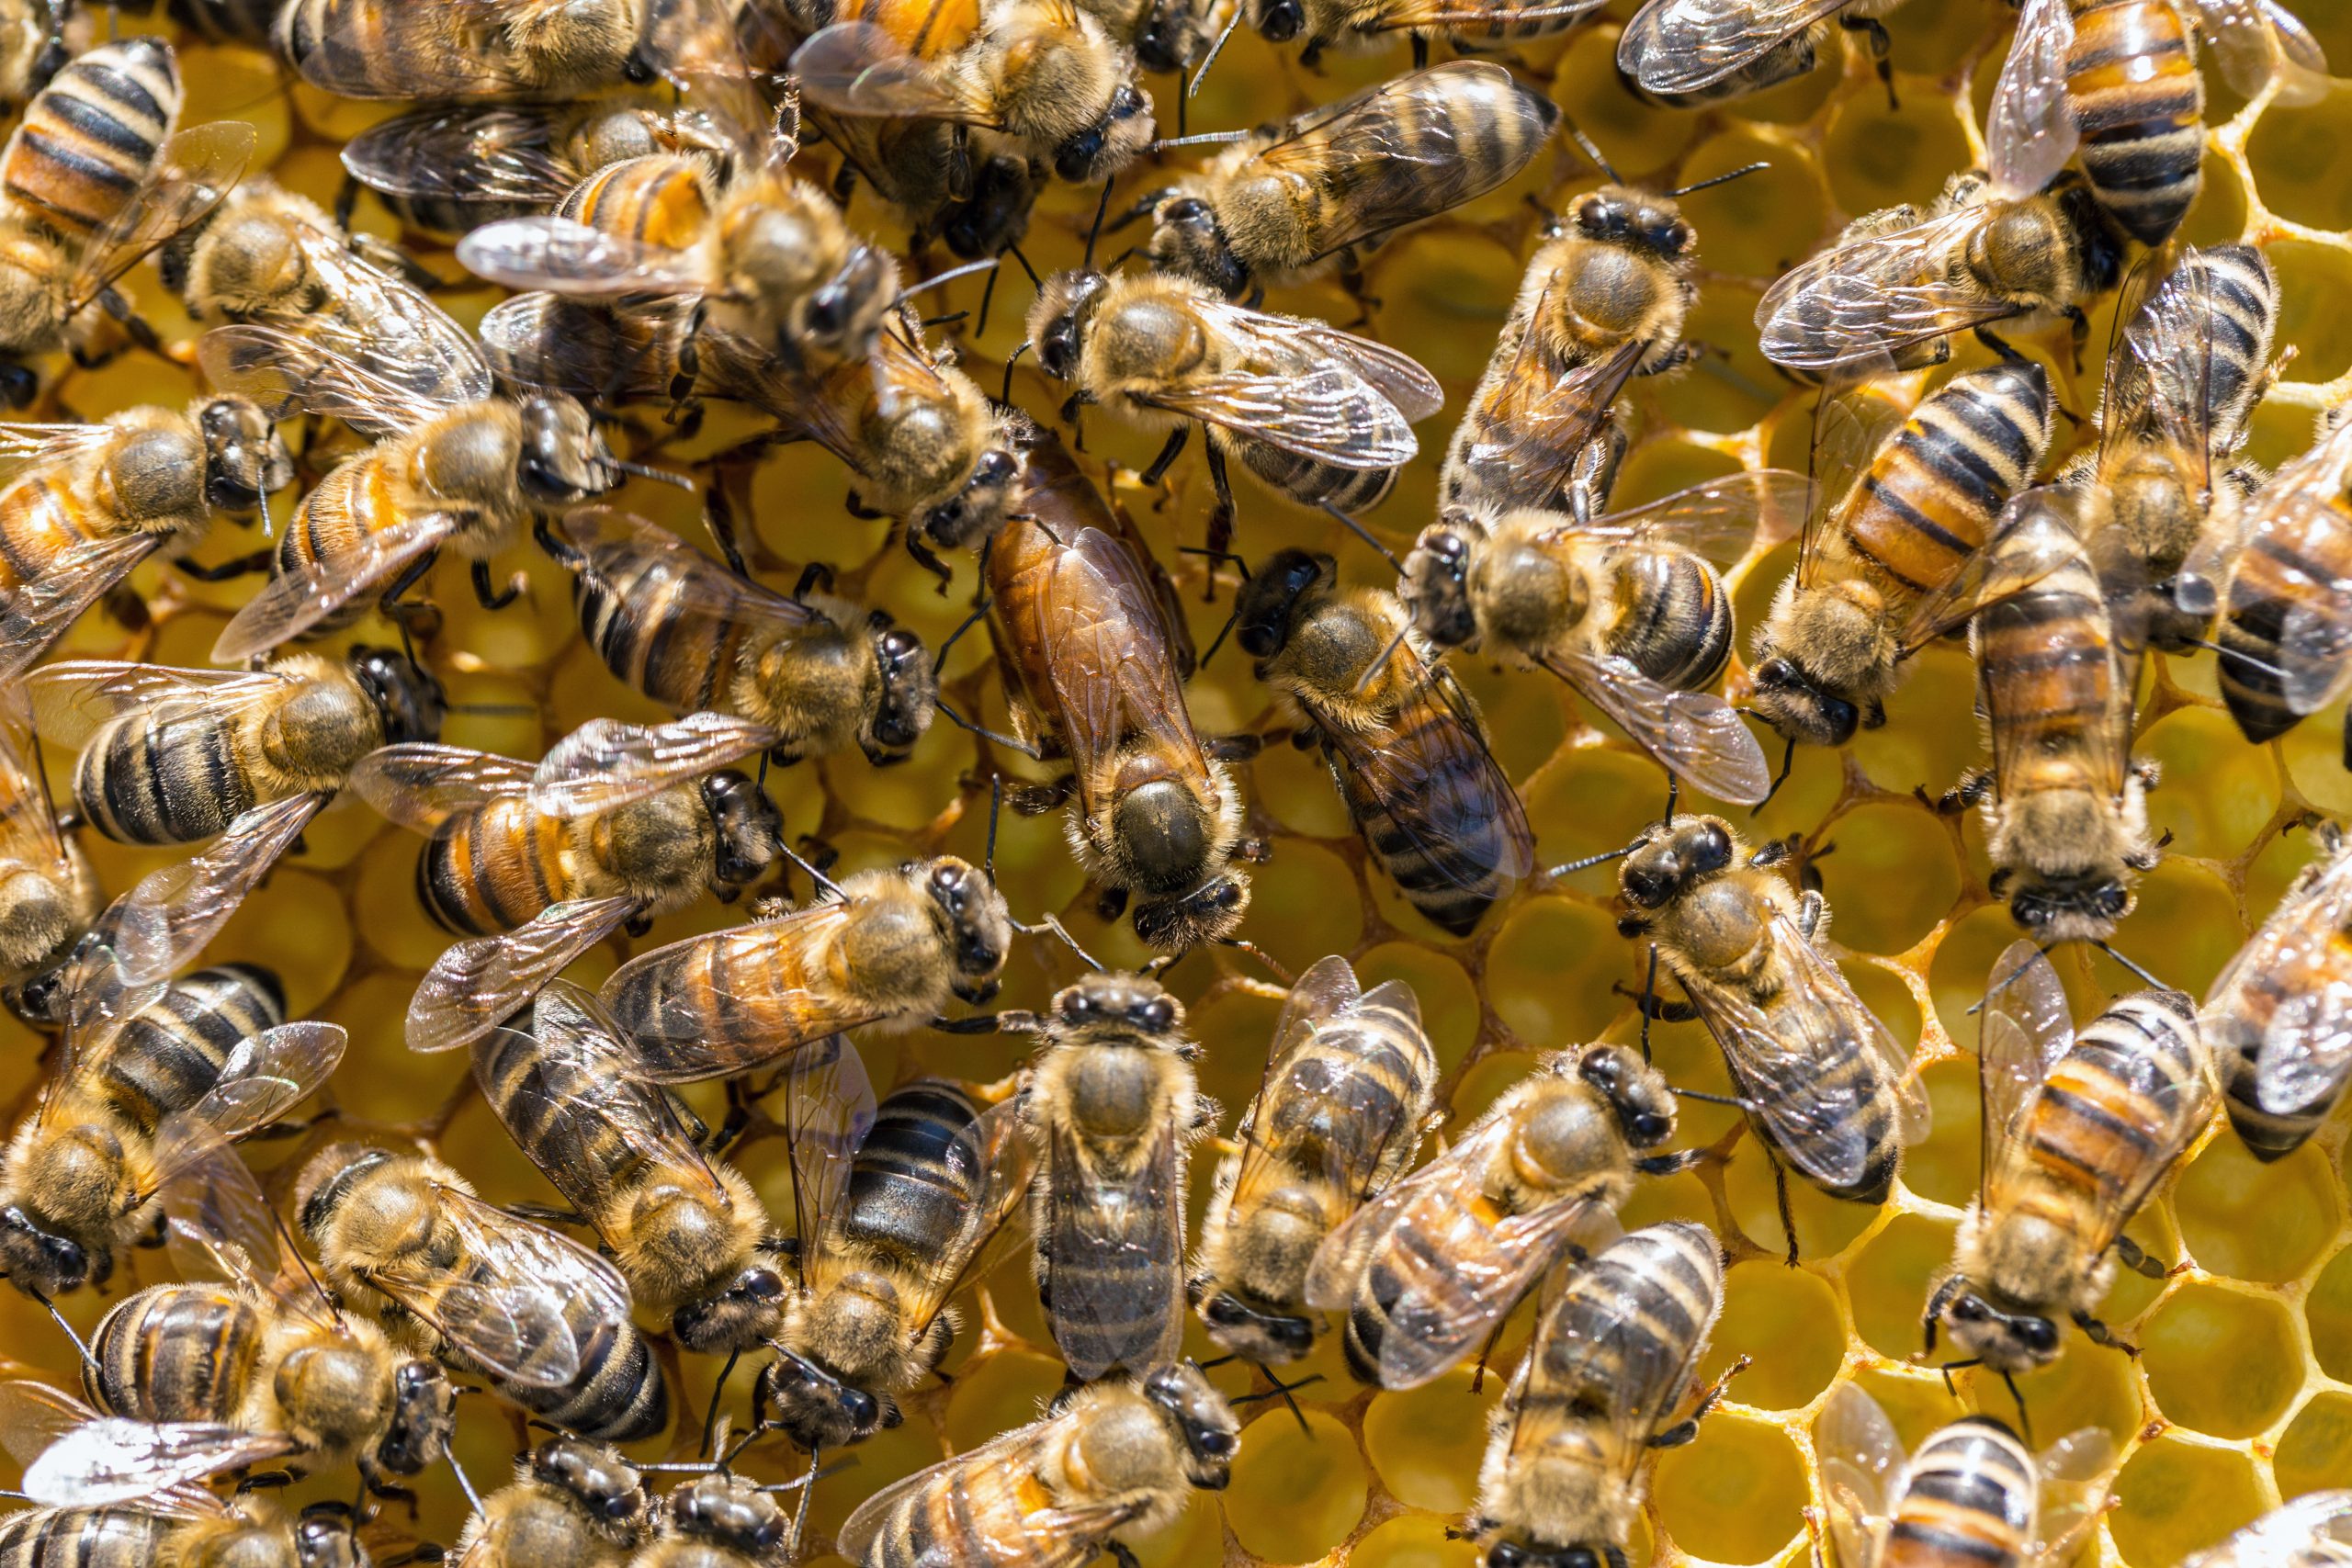 Honeybees Inside the Hive